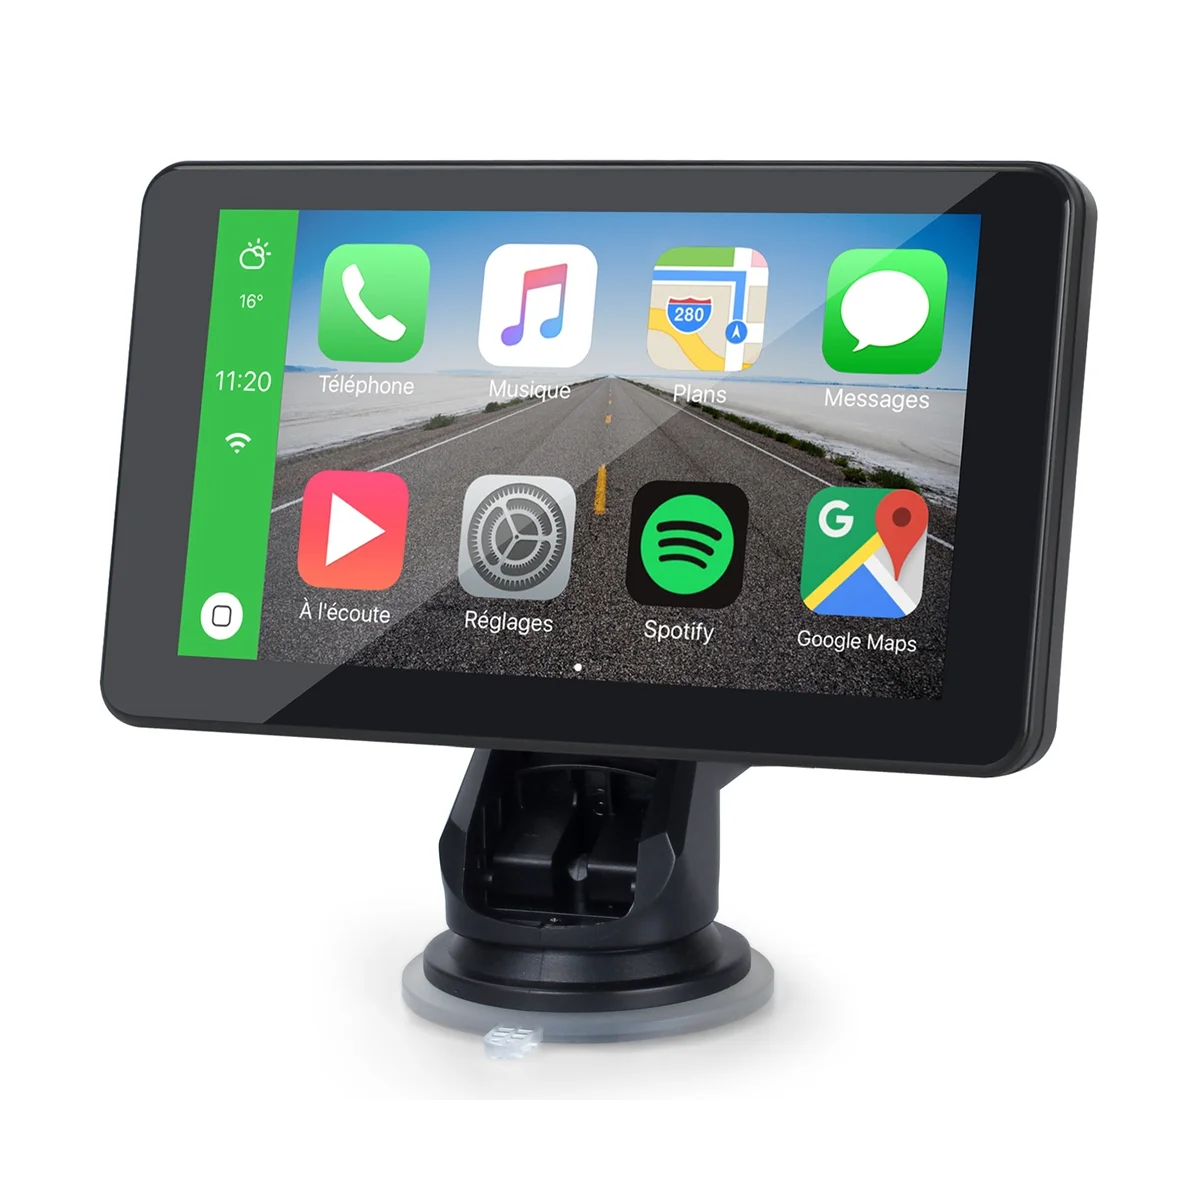 

7Inch Carplay Monitor Portable Wireless CarPlay Navigation for Car Universal Display Android Auto and Siri Compatible